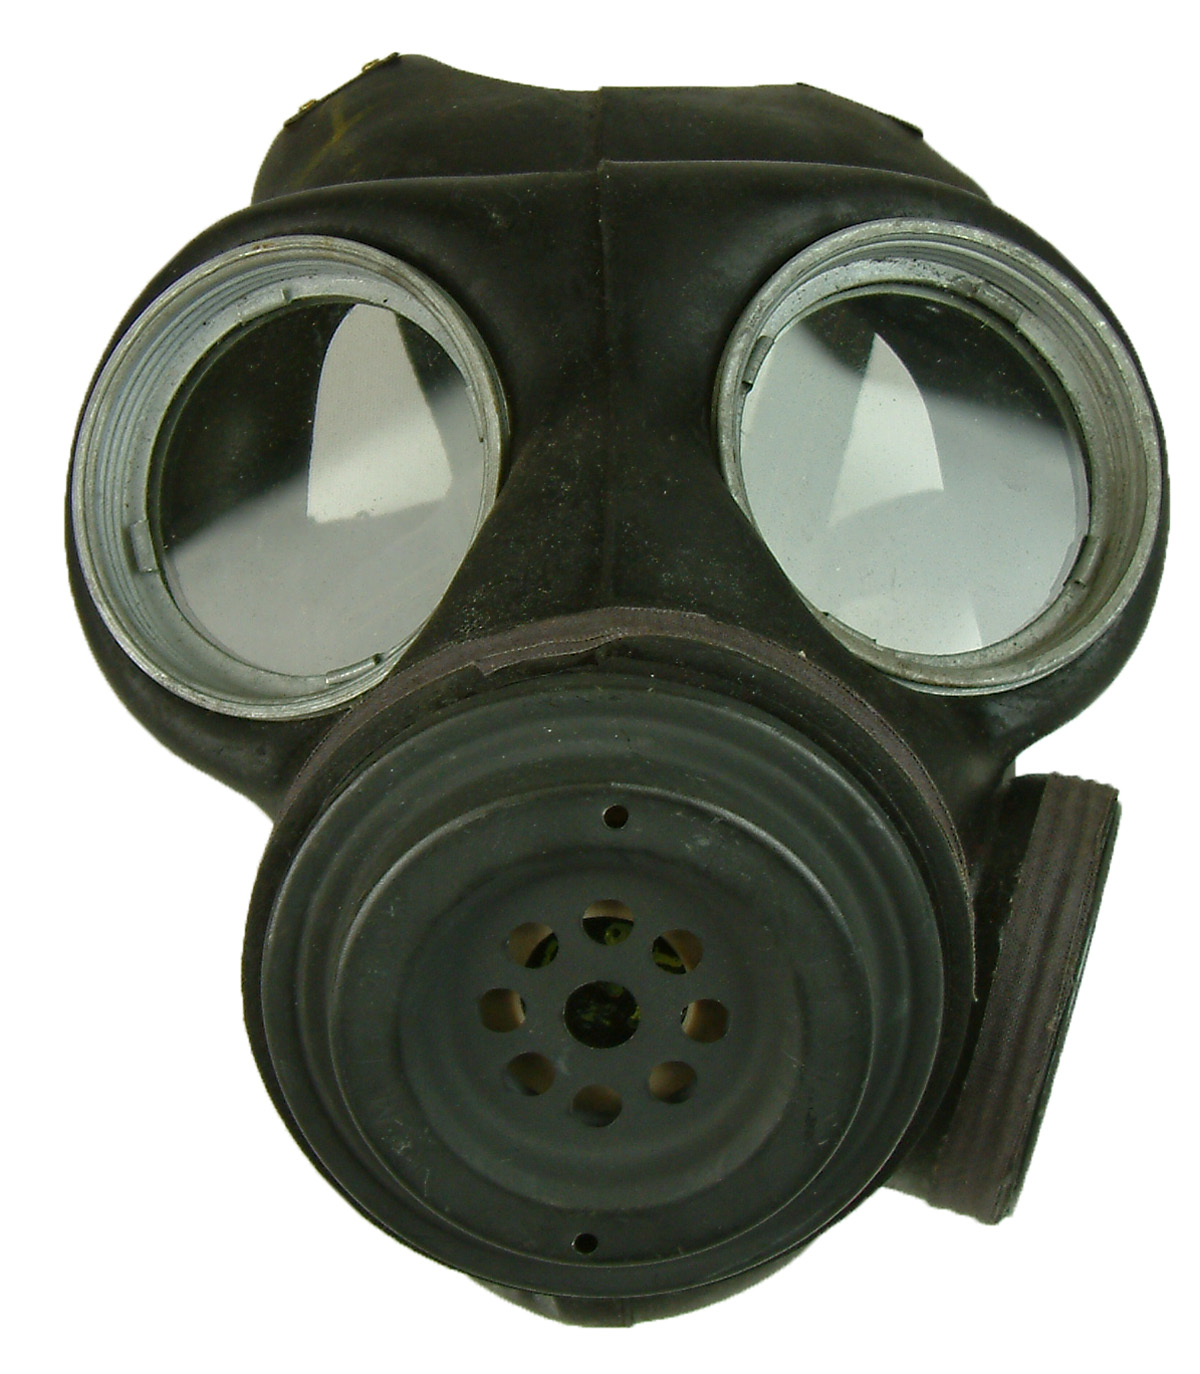 gas mask ww2 costume